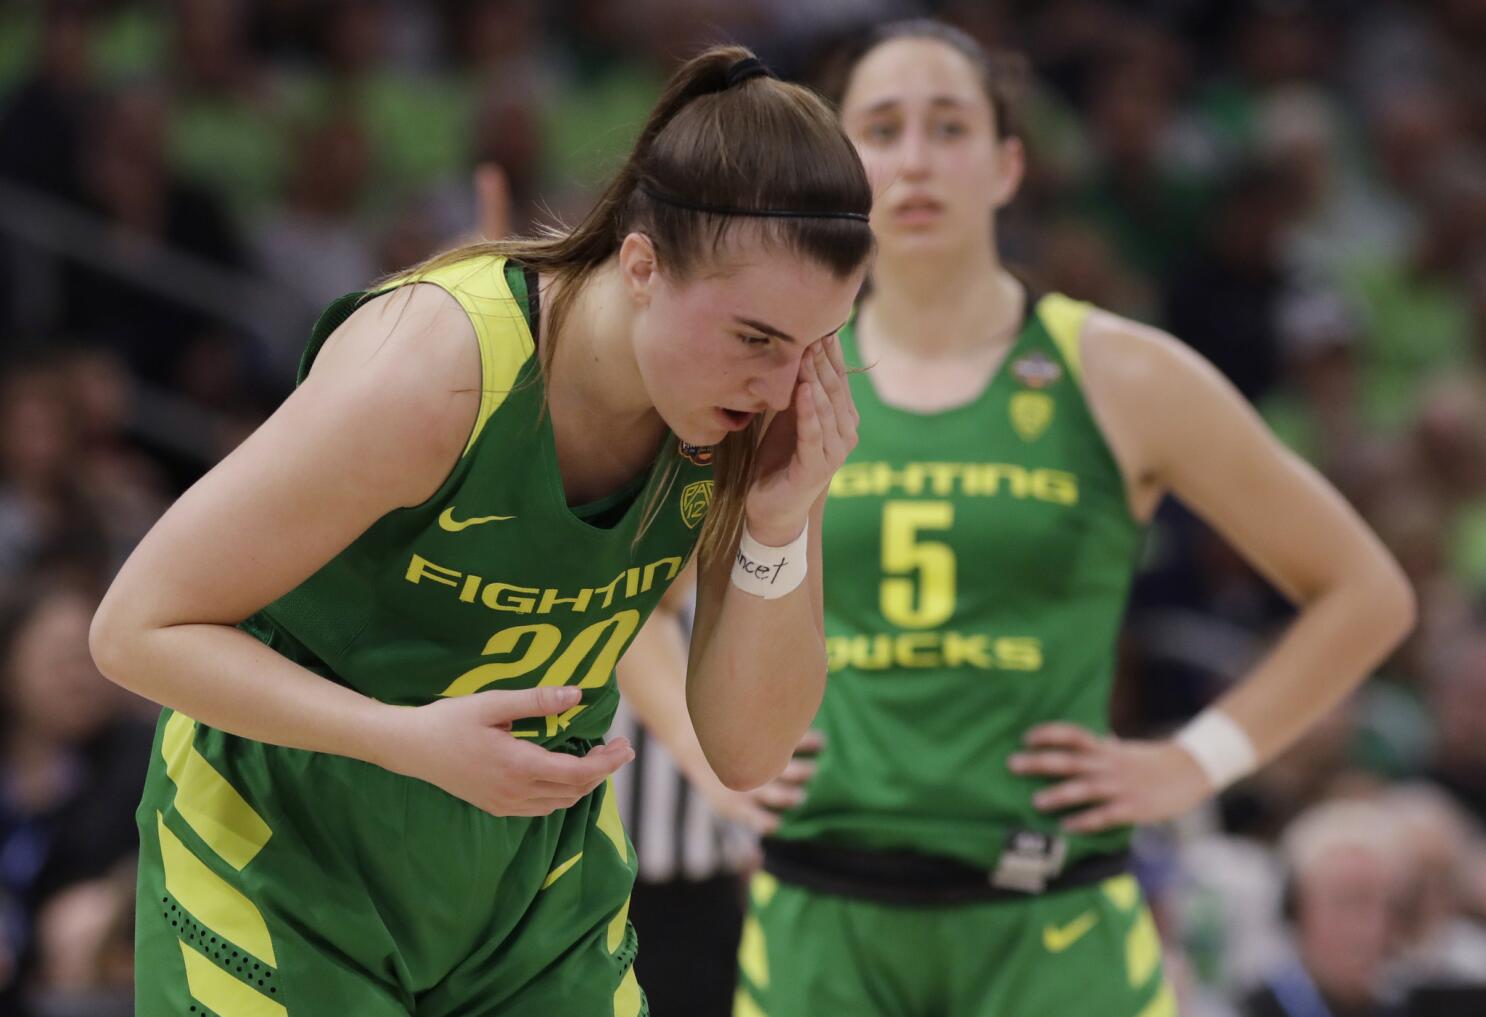 Sabrina Ionescu - Women's Basketball - University of Oregon Athletics